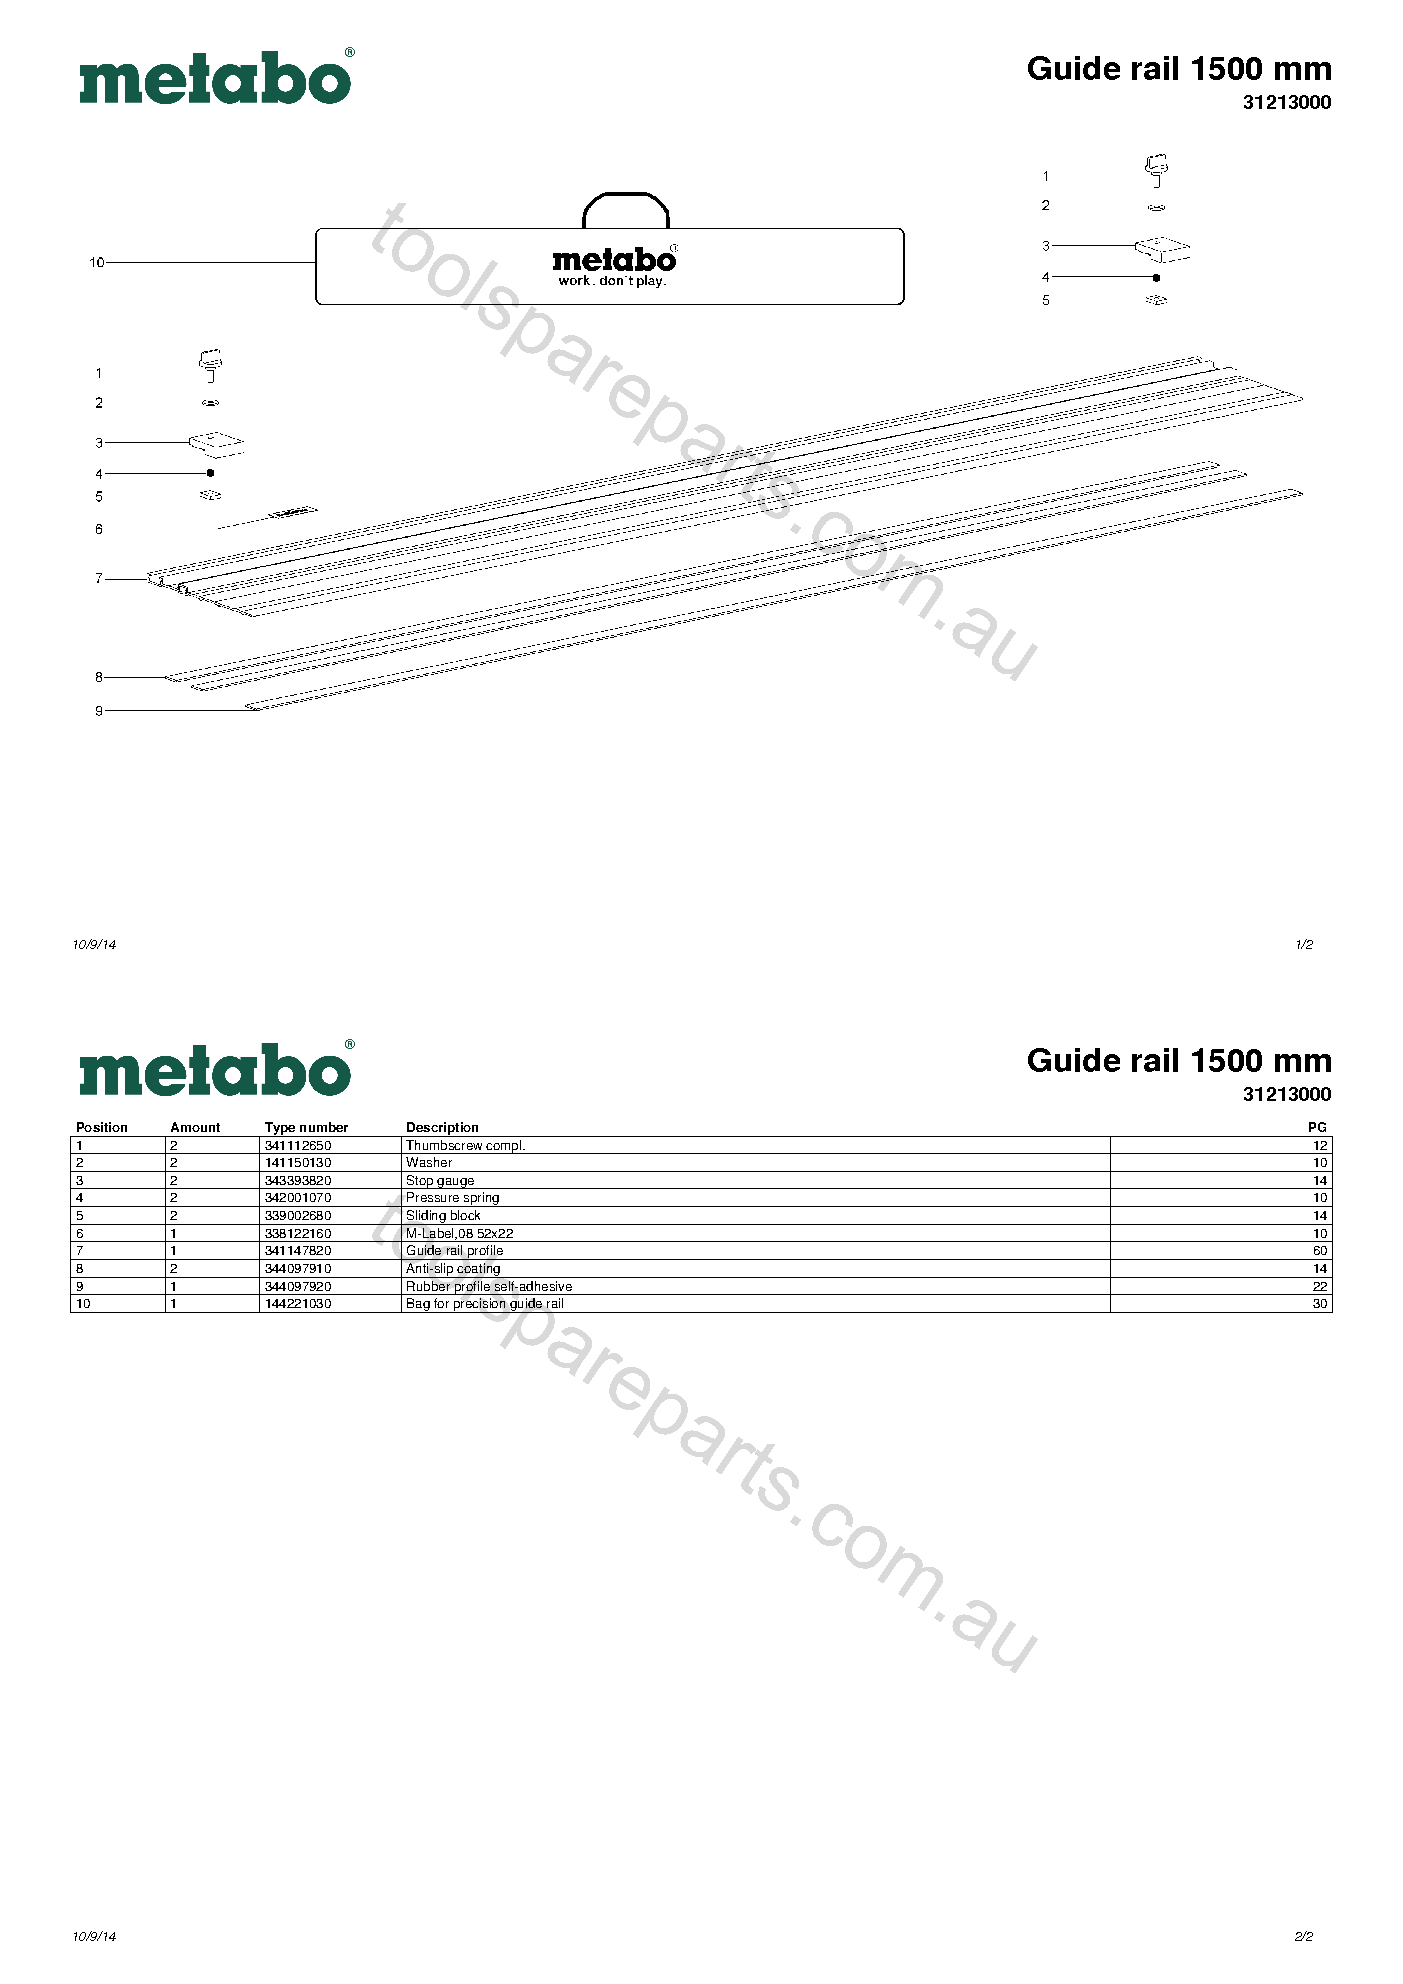 Metabo Guide rail 1500 mm 31213000  Diagram 1